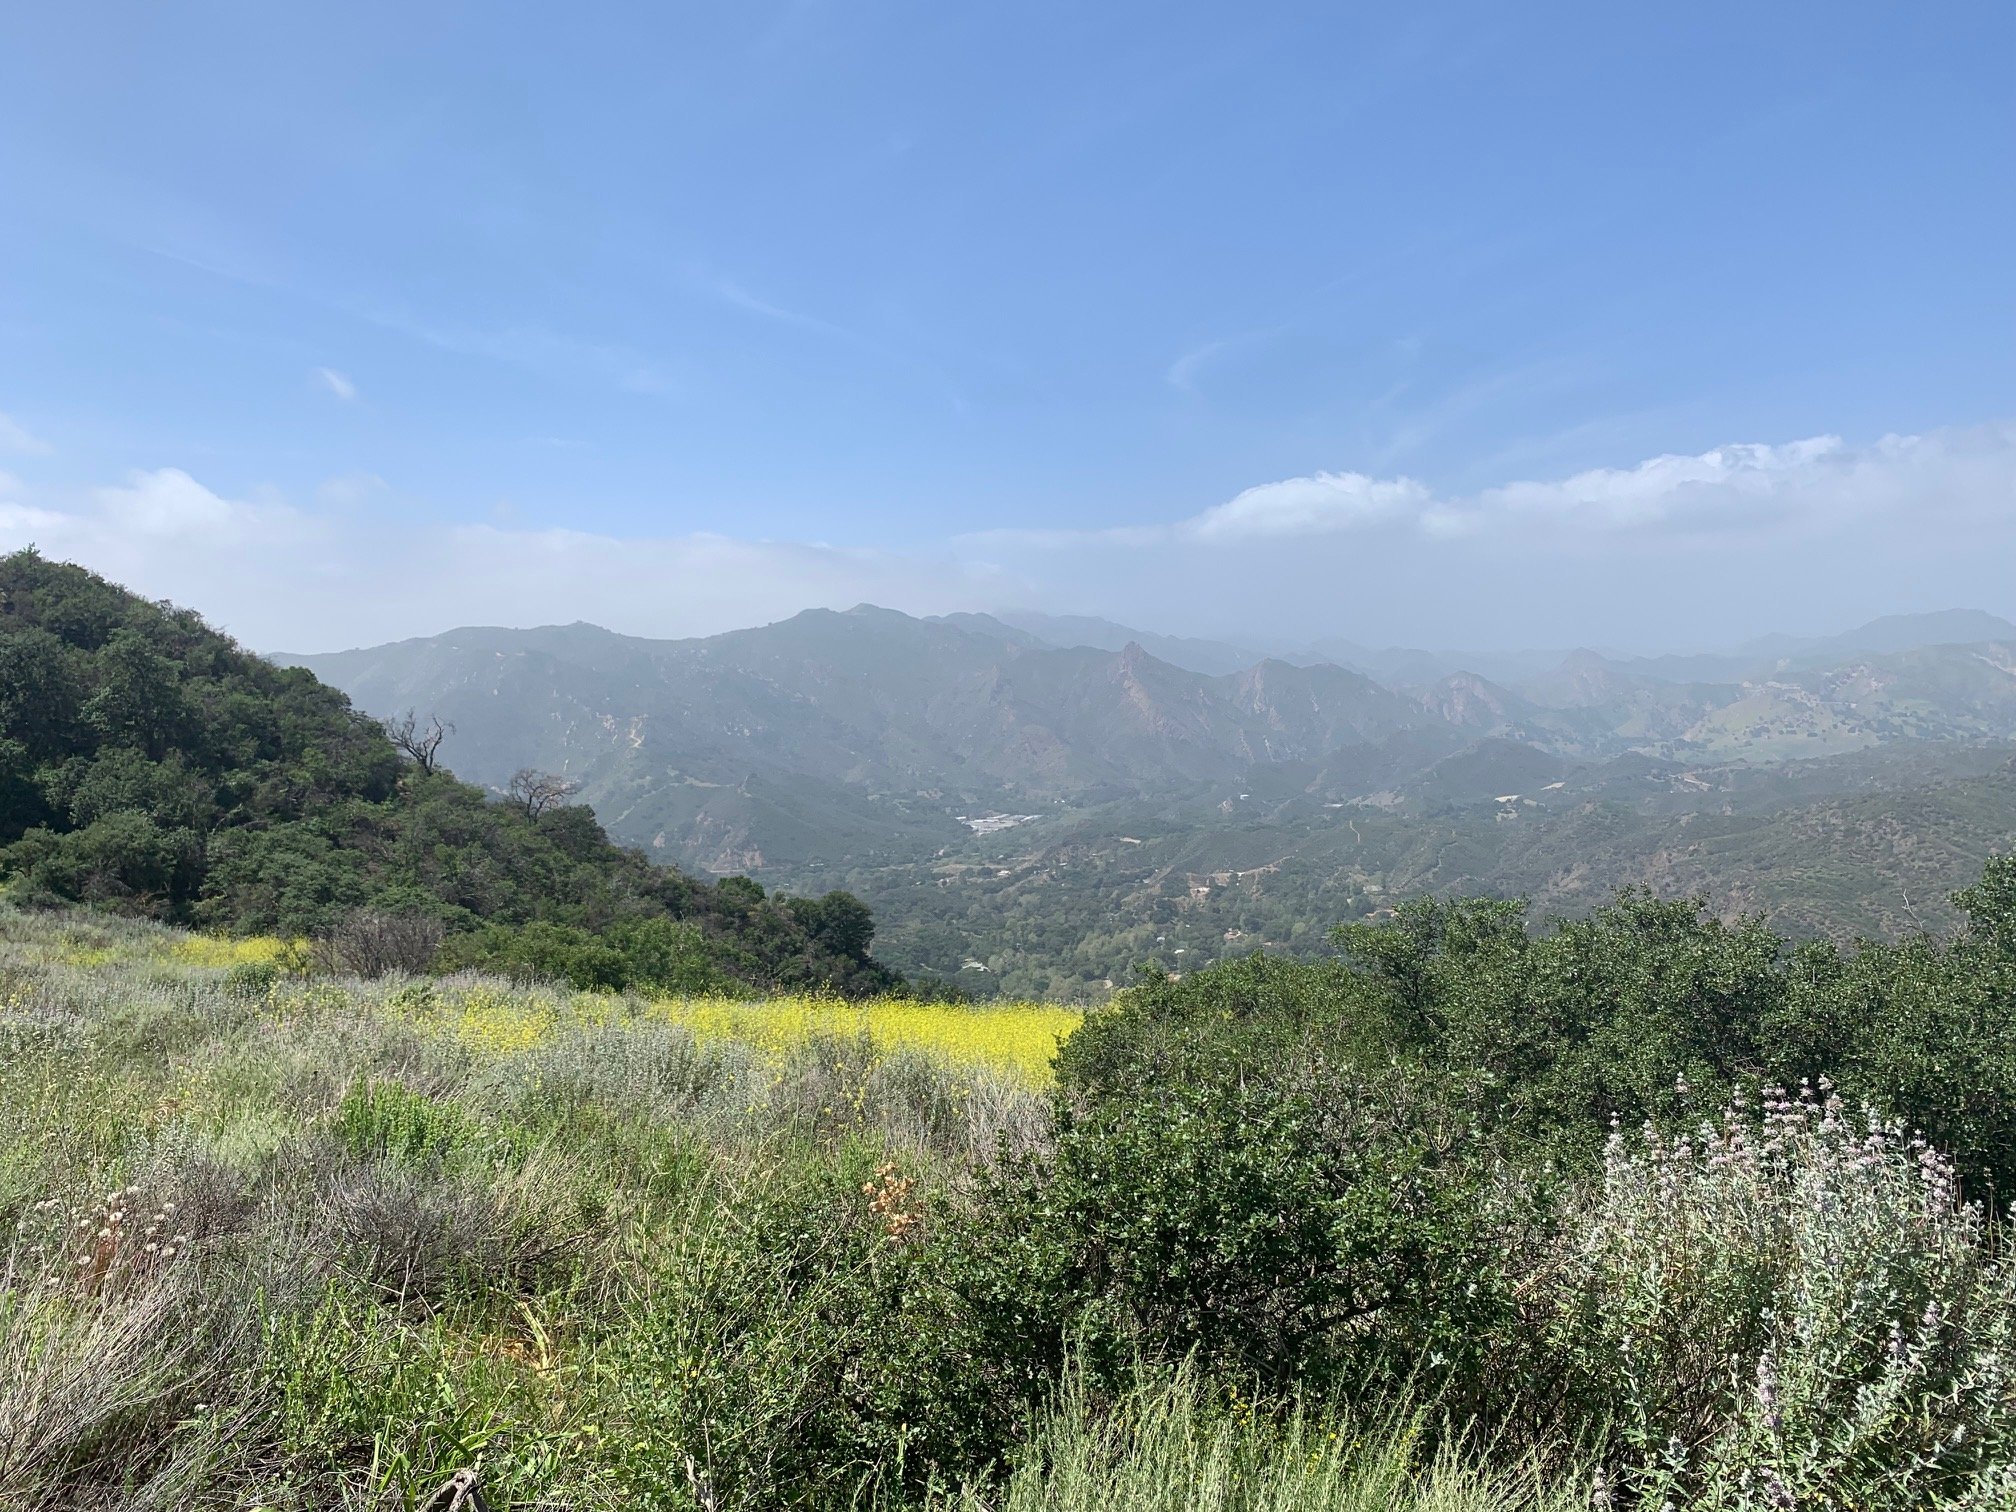 View towards Malibu Canyon